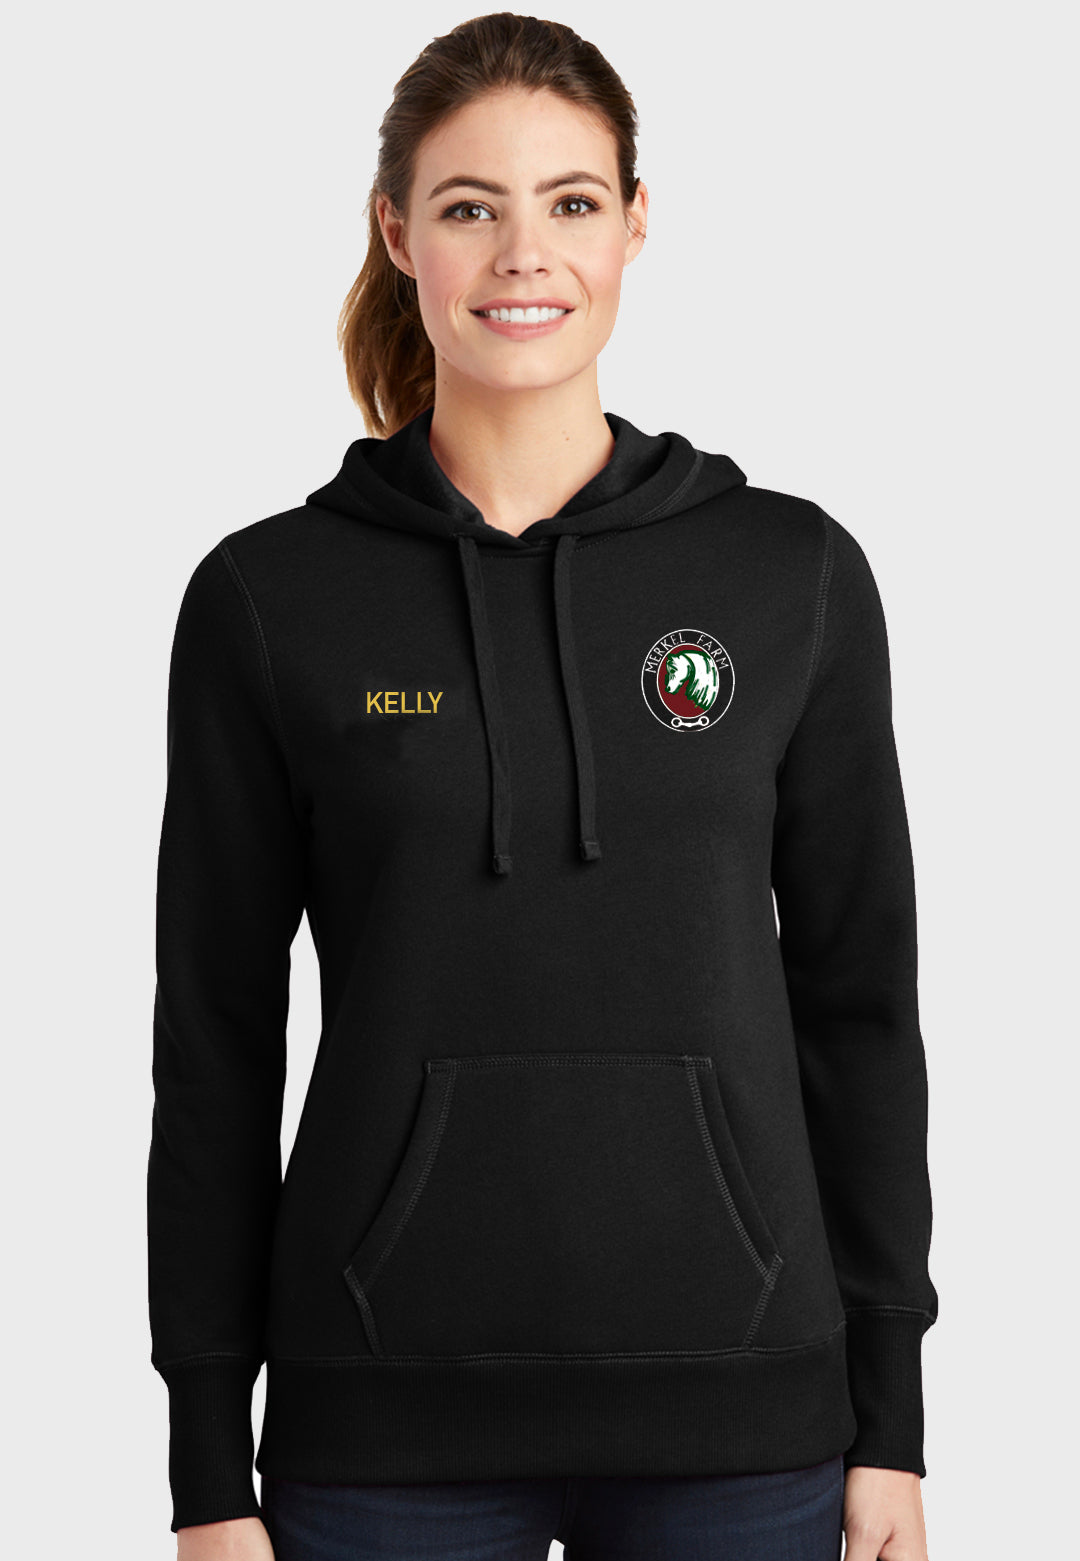 Merkel Farm Equestrian Center Sport-Tek® Ladies Pullover Hooded Sweatshirt - Black